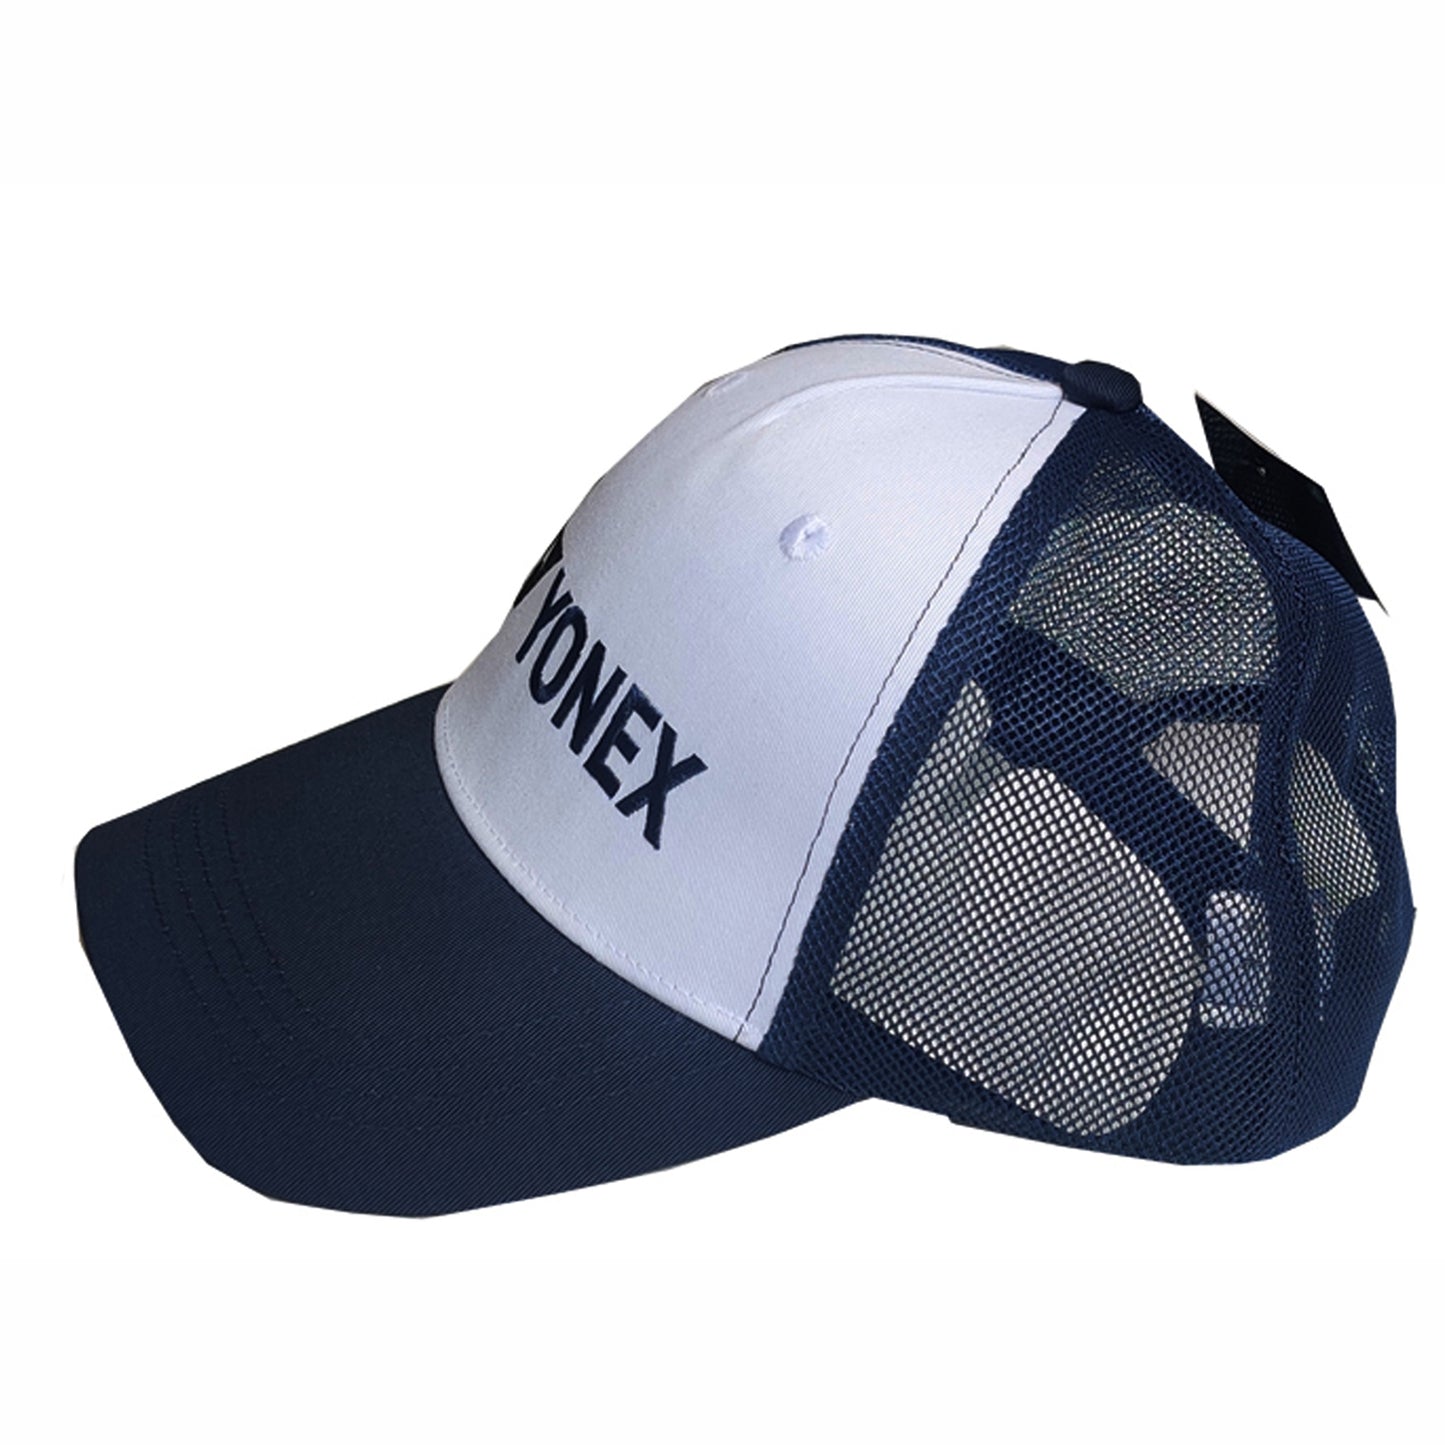 Yonex T050-300-S Sports Cap - Best Price online Prokicksports.com